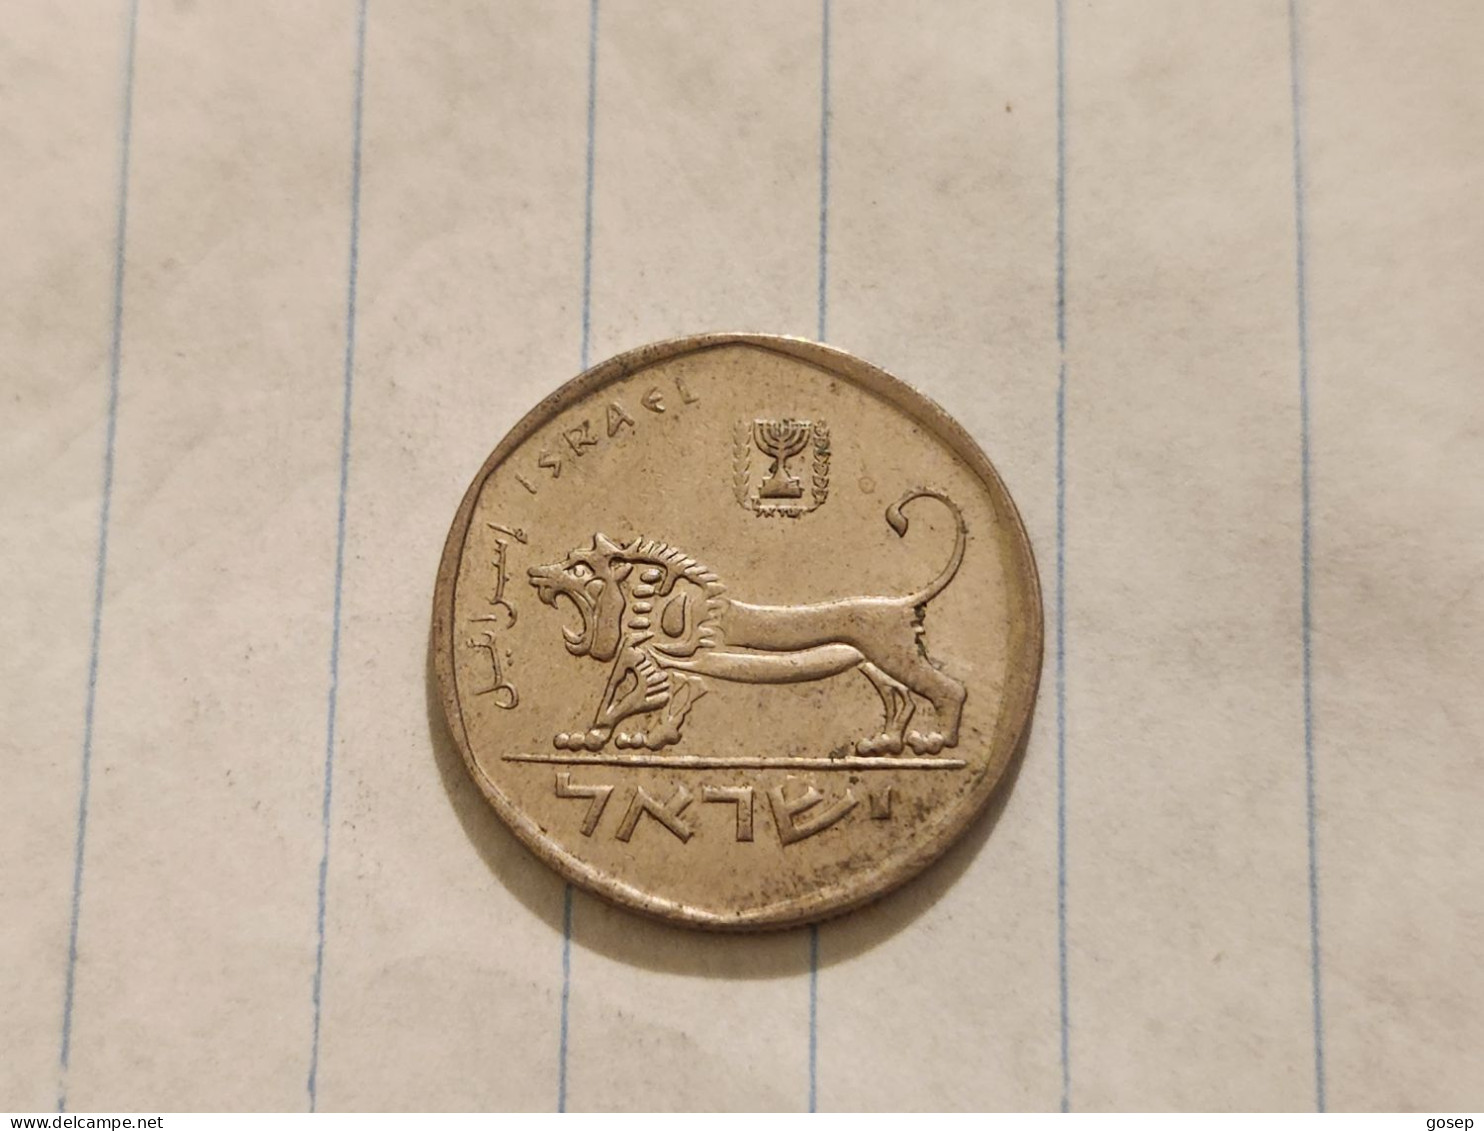 Israel-Coins-SHEKEL(1985-1981)-1/2 SHEKEL-Hapanka 32-(1982)-(28)-תשמ"ב-NIKEL-good - Israel